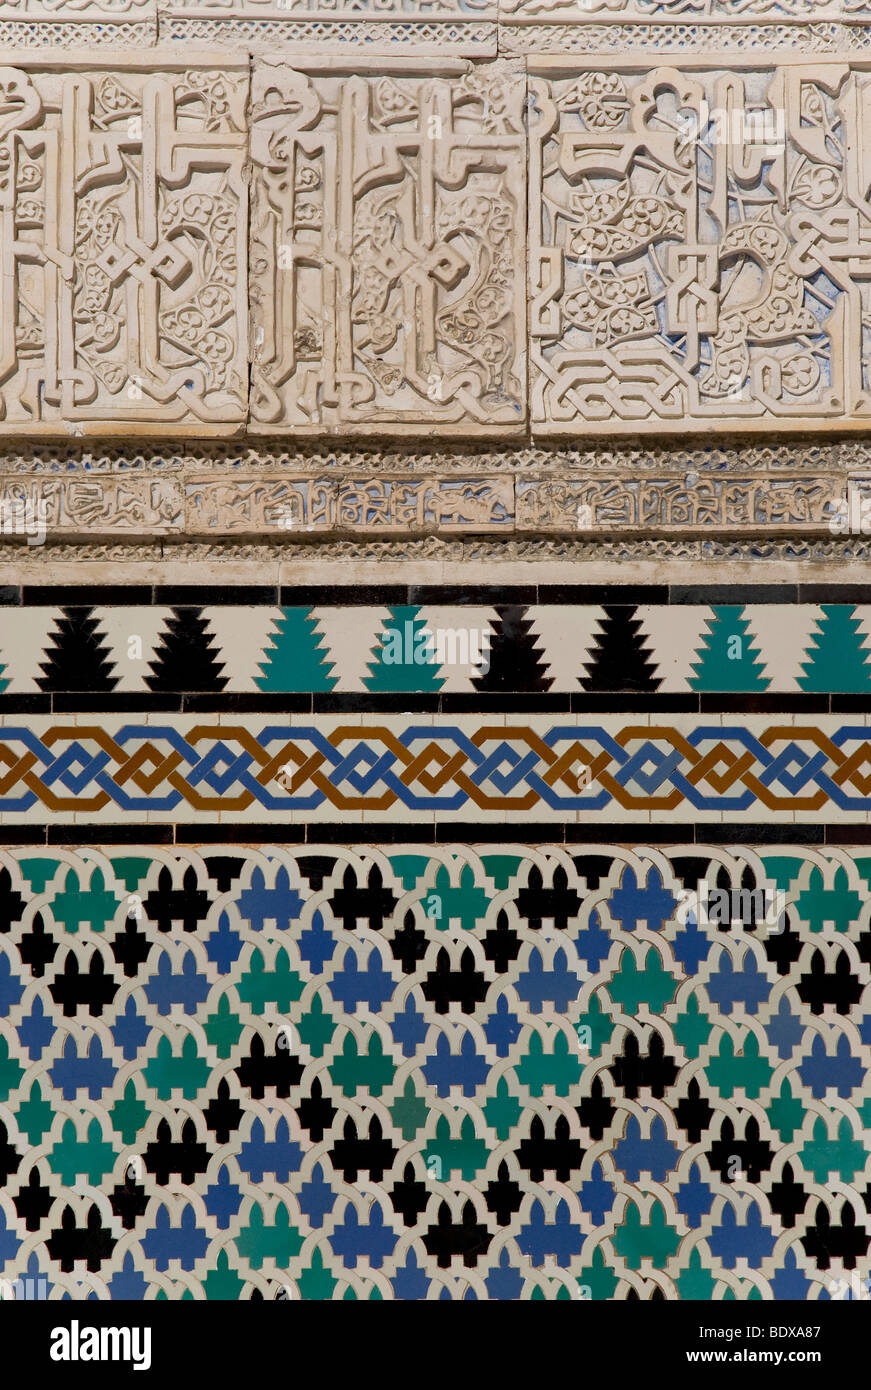 Alcazar, Arabian royal palace, tiles, mosaics, Barrio Santa Cruz, Seville, Andalusia, Spain, Europe Stock Photo